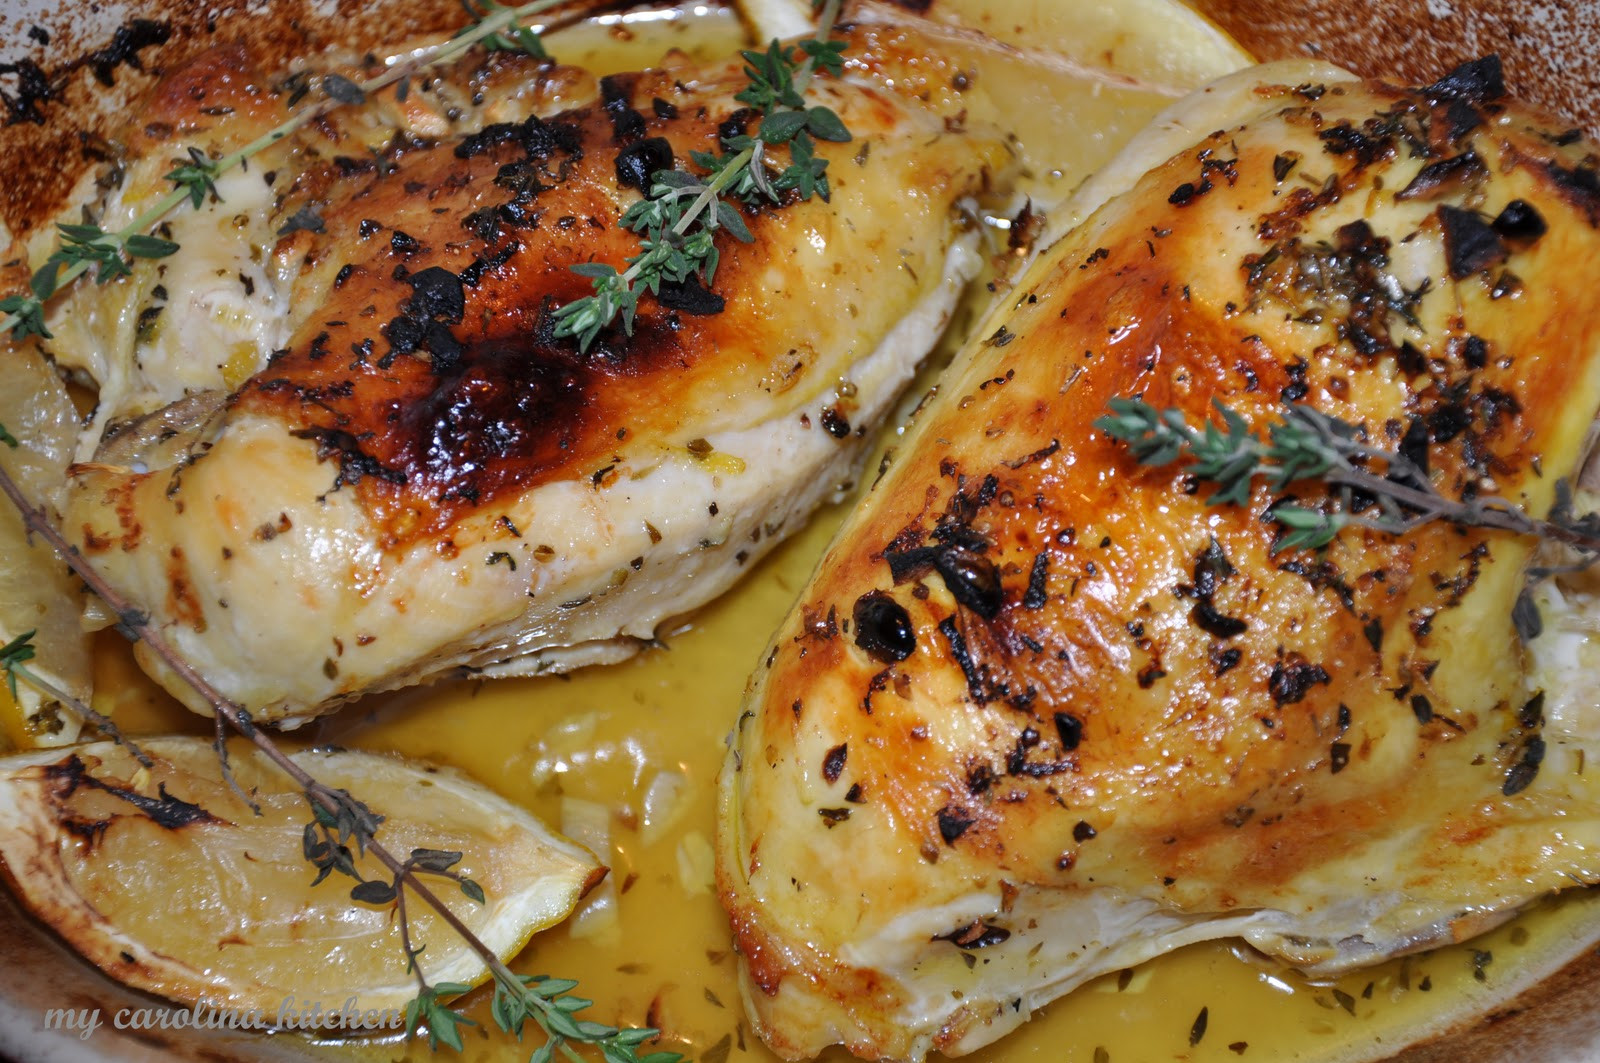 Barefoot Contessa Oven Baked Chicken Elegant My Carolina Kitchen Barefoot Contessa’s Roasted Lemon